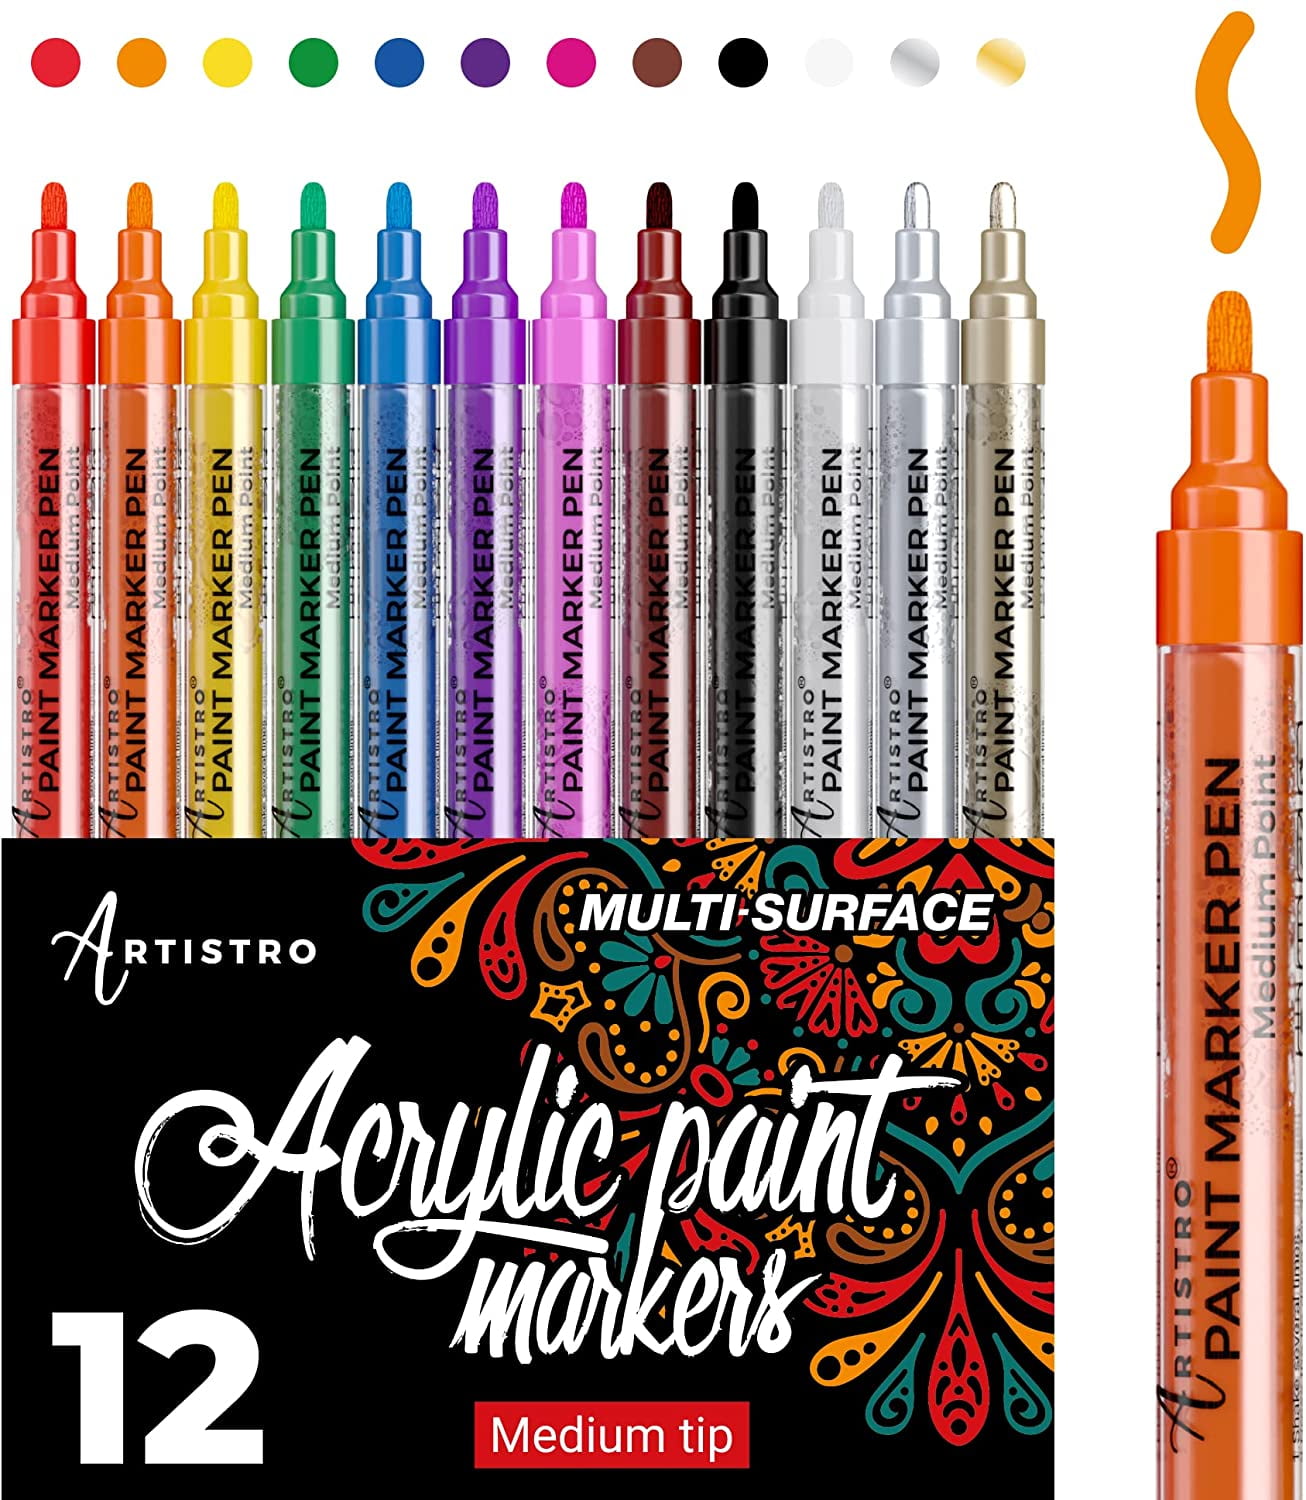 Arteza Acrylic Paint Markers Art Supply Set, Black Fine Nib - 12 Piece 